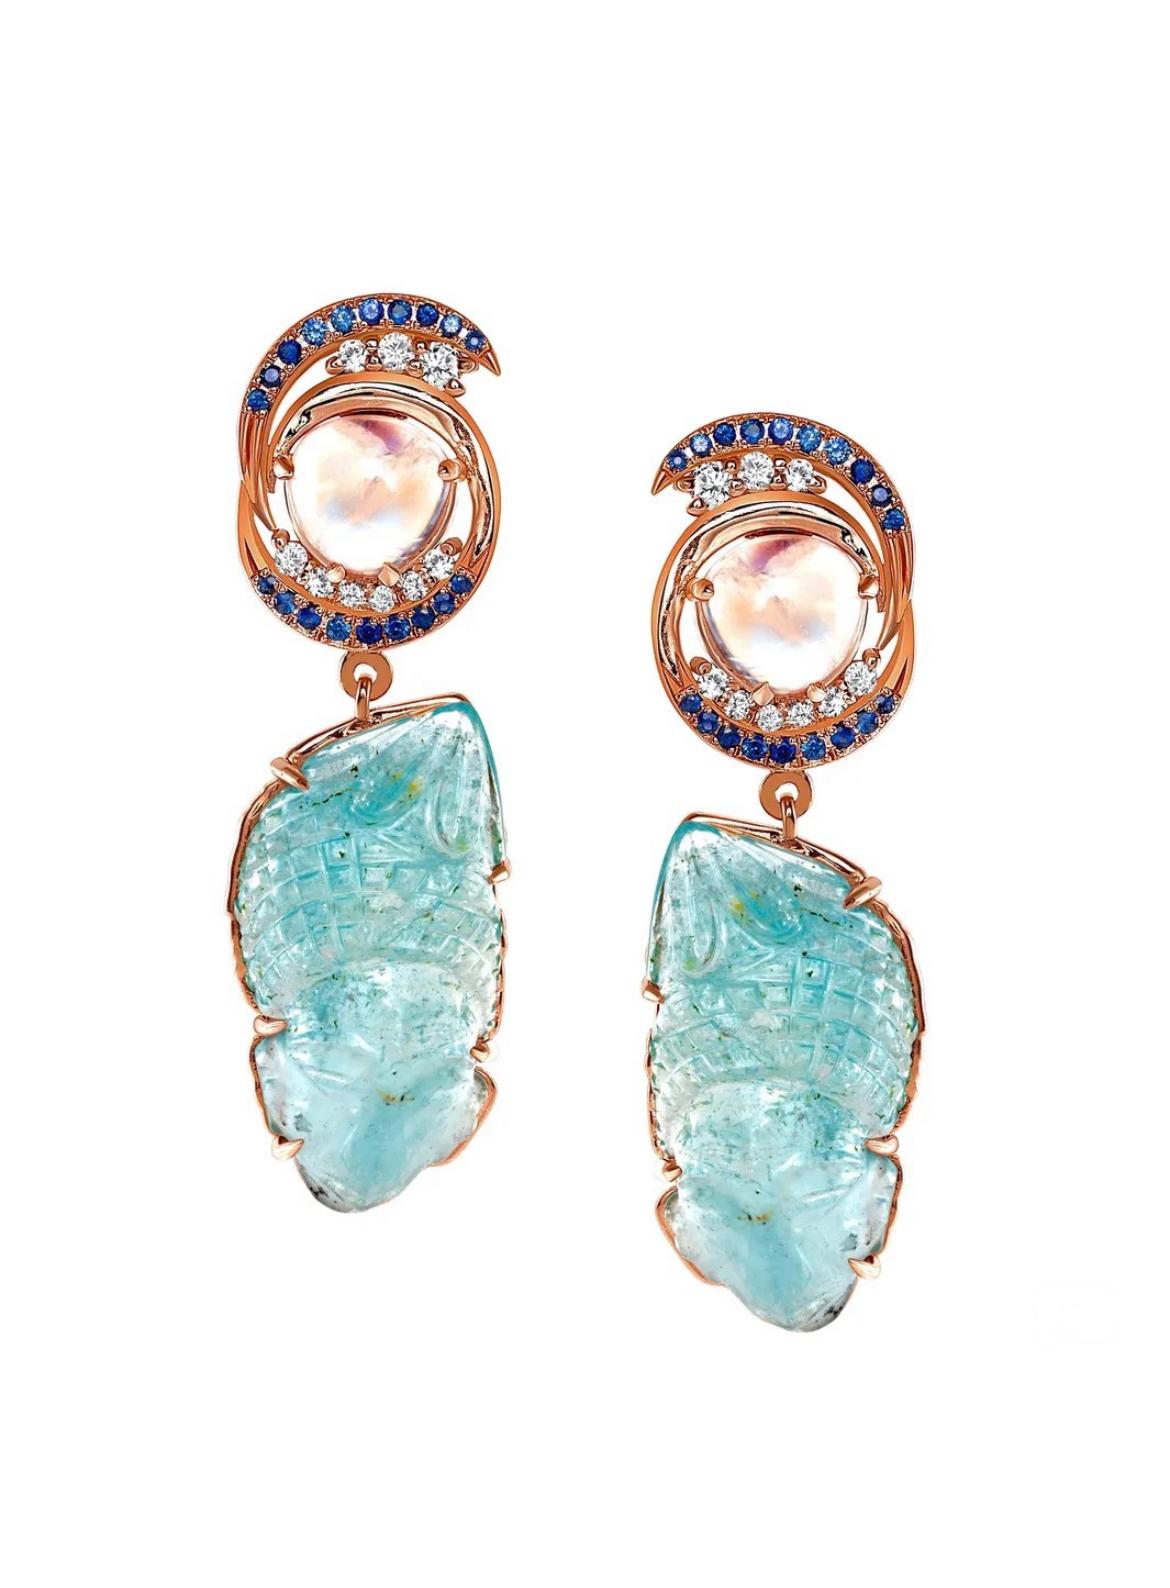 Mixed Cut Blue Sapphire, Aquamarine and Rainbow Moonstone earrings. 